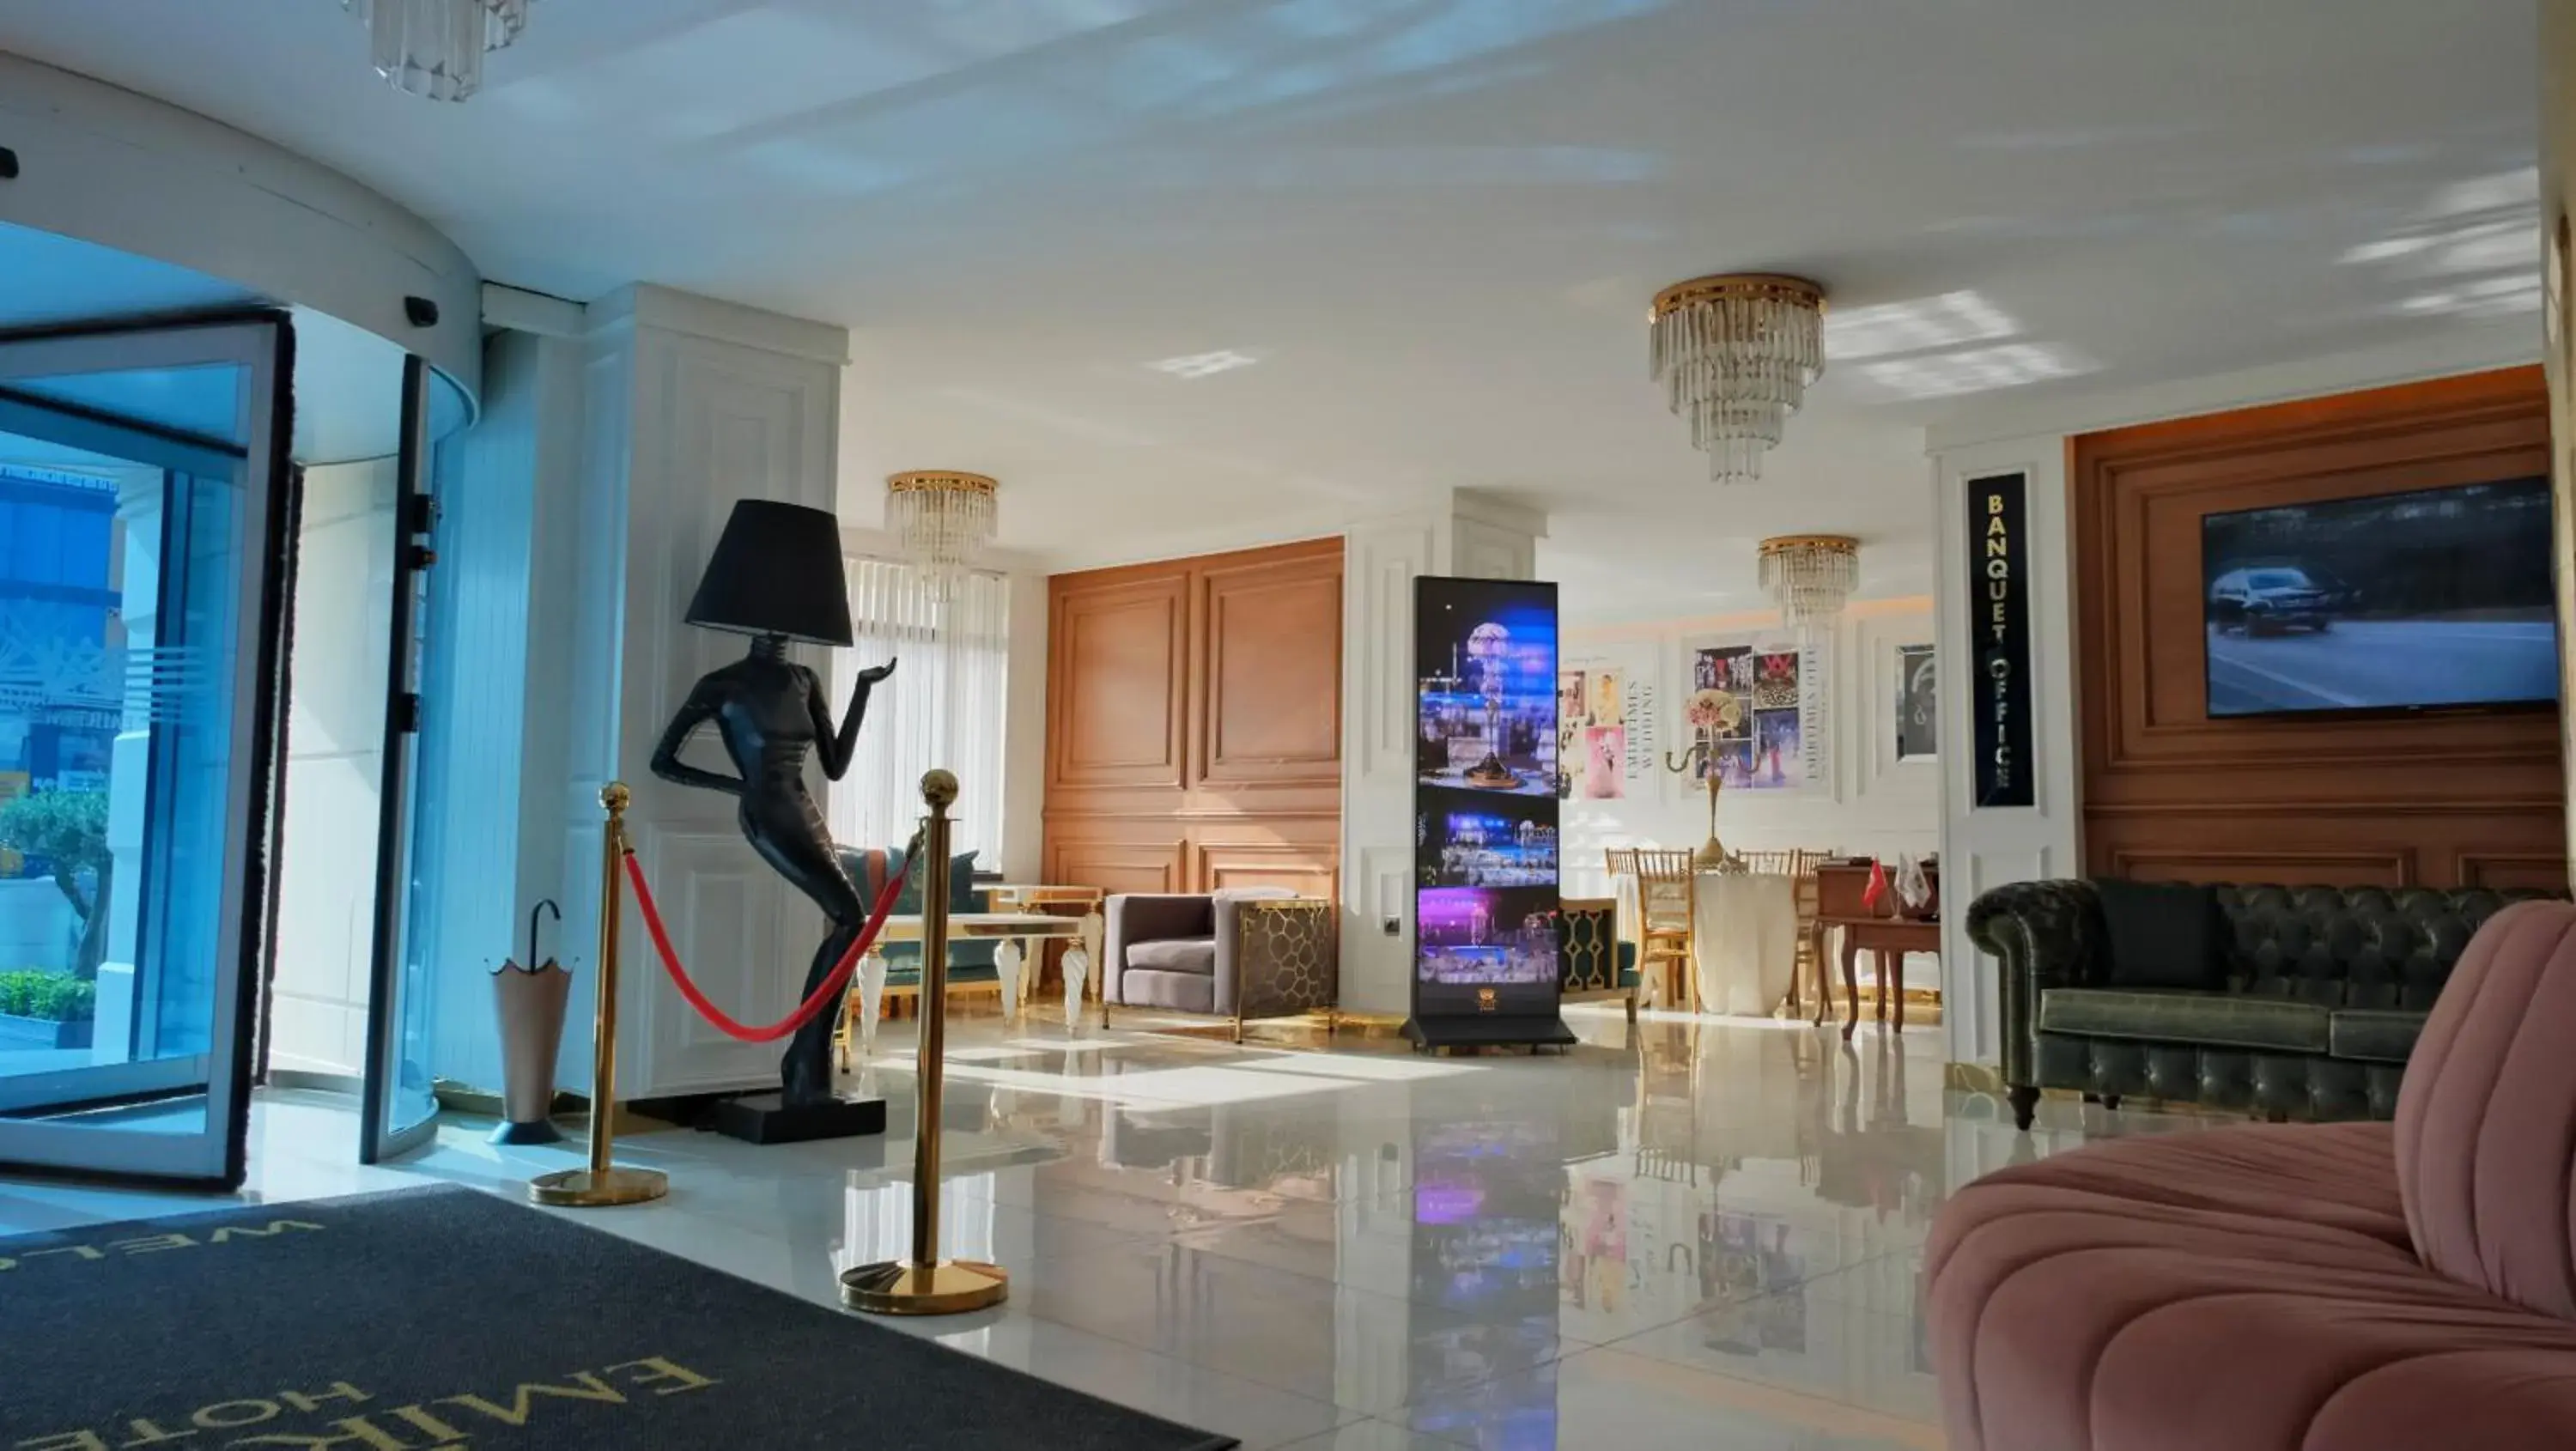 Lobby or reception in Emirtimes Hotel&Spa - Tuzla